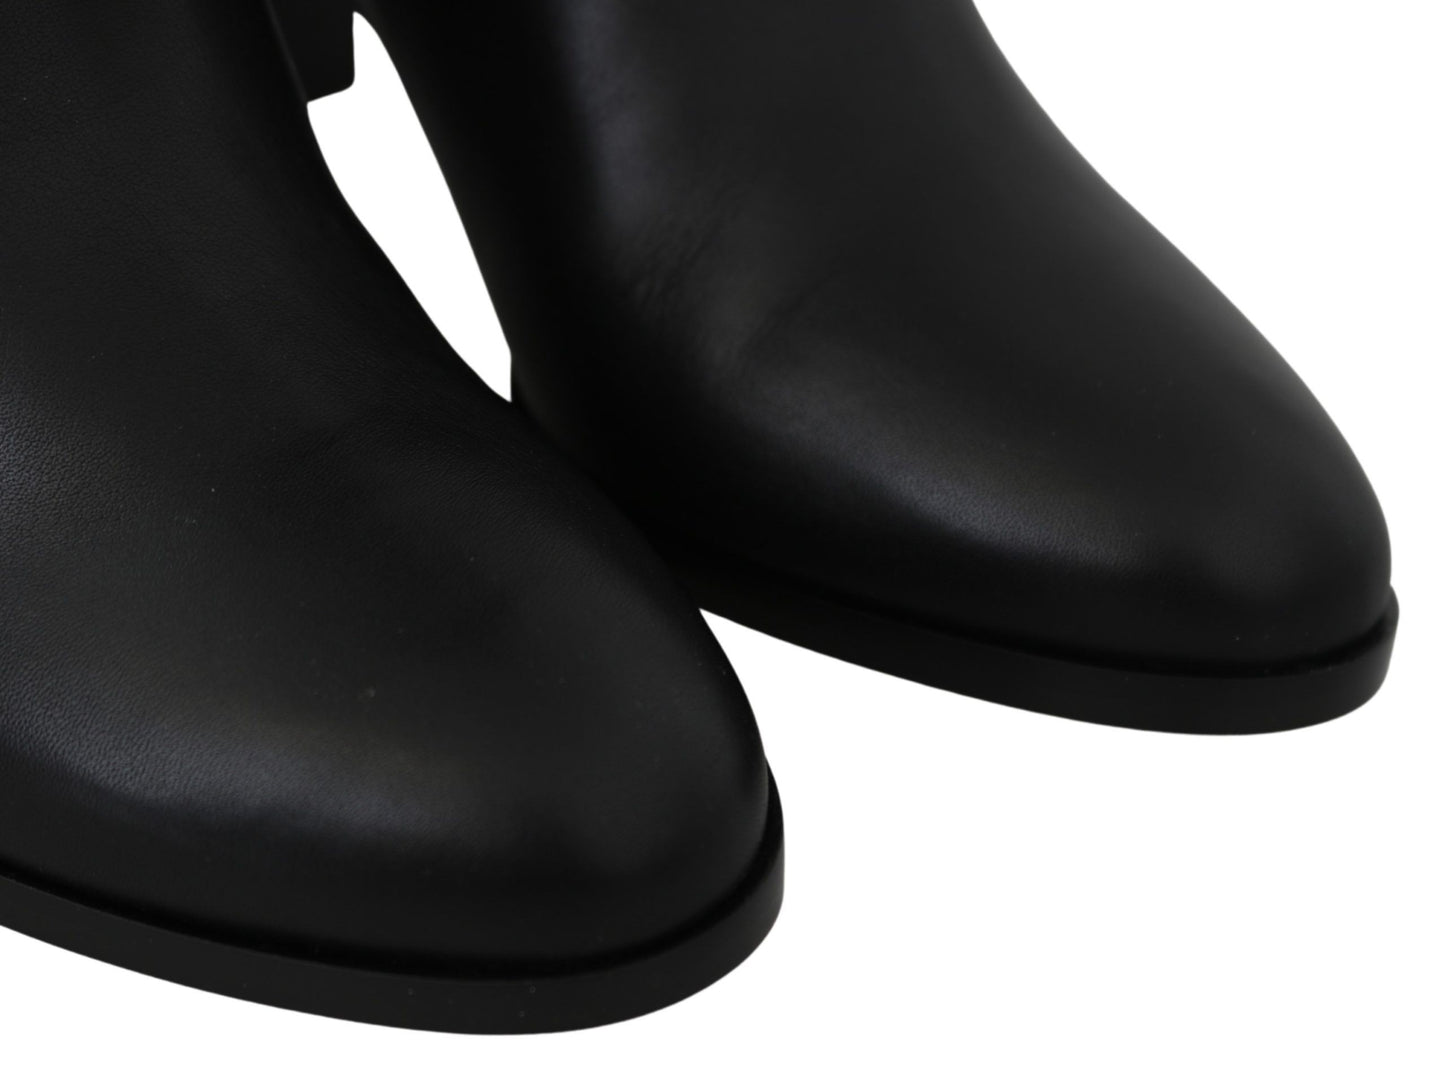 Elegant Black Calf Leather Heeled Boots